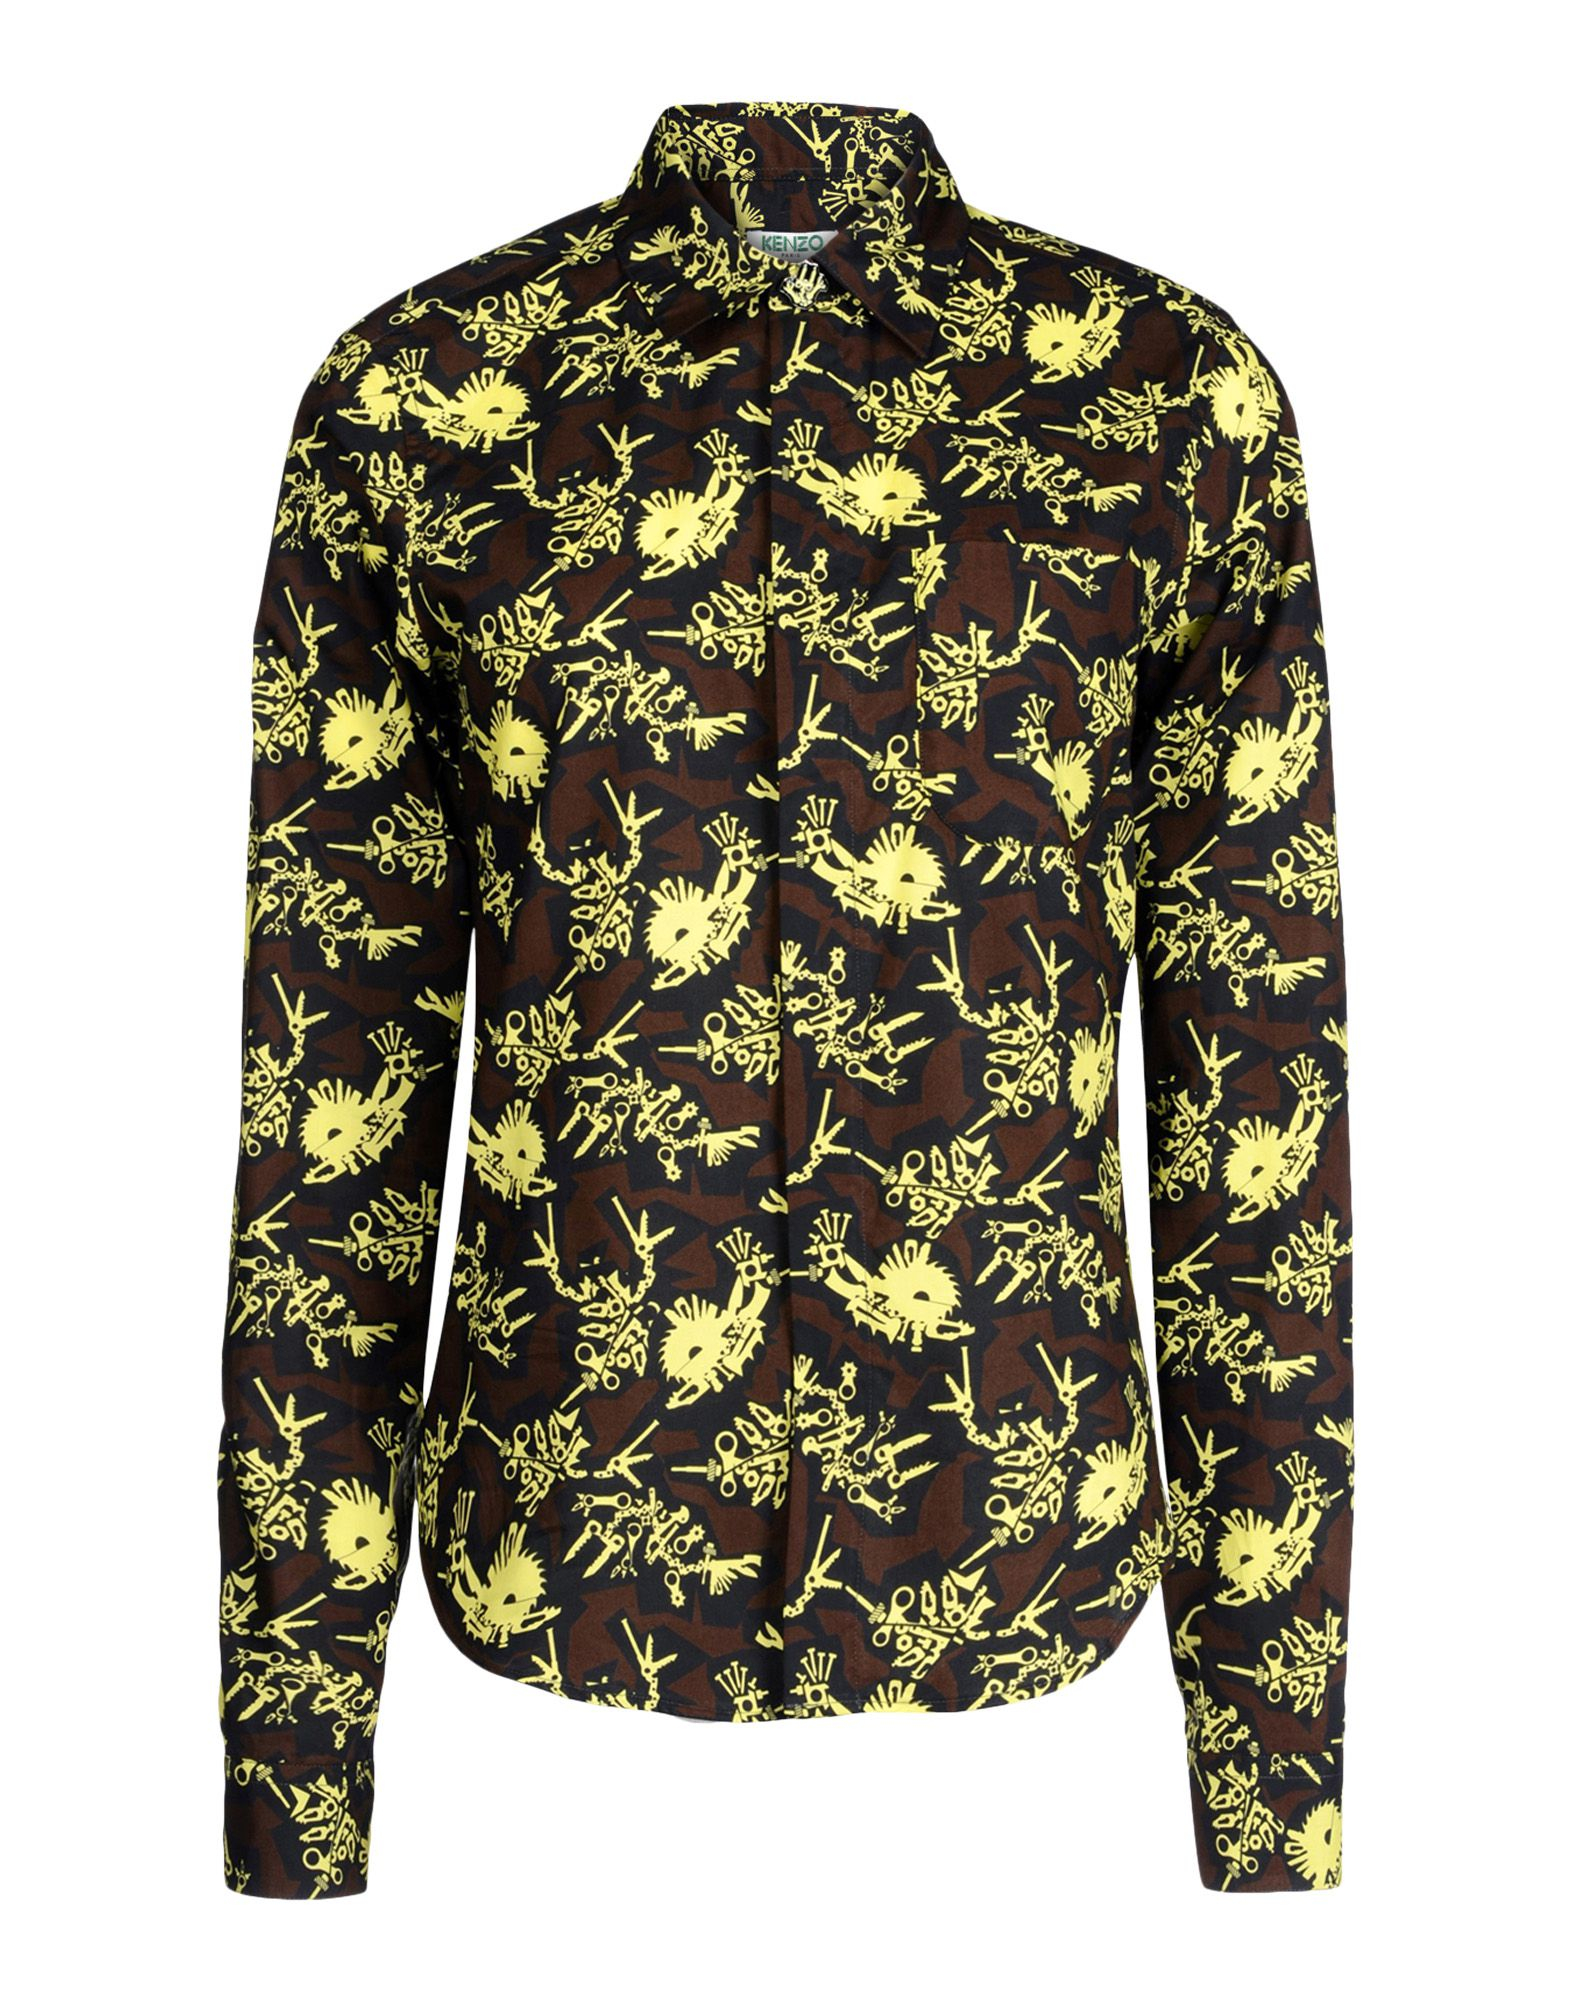 Kenzo Long Sleeve Shirt in Yellow (CHOCOLATE) - Save 31% | Lyst